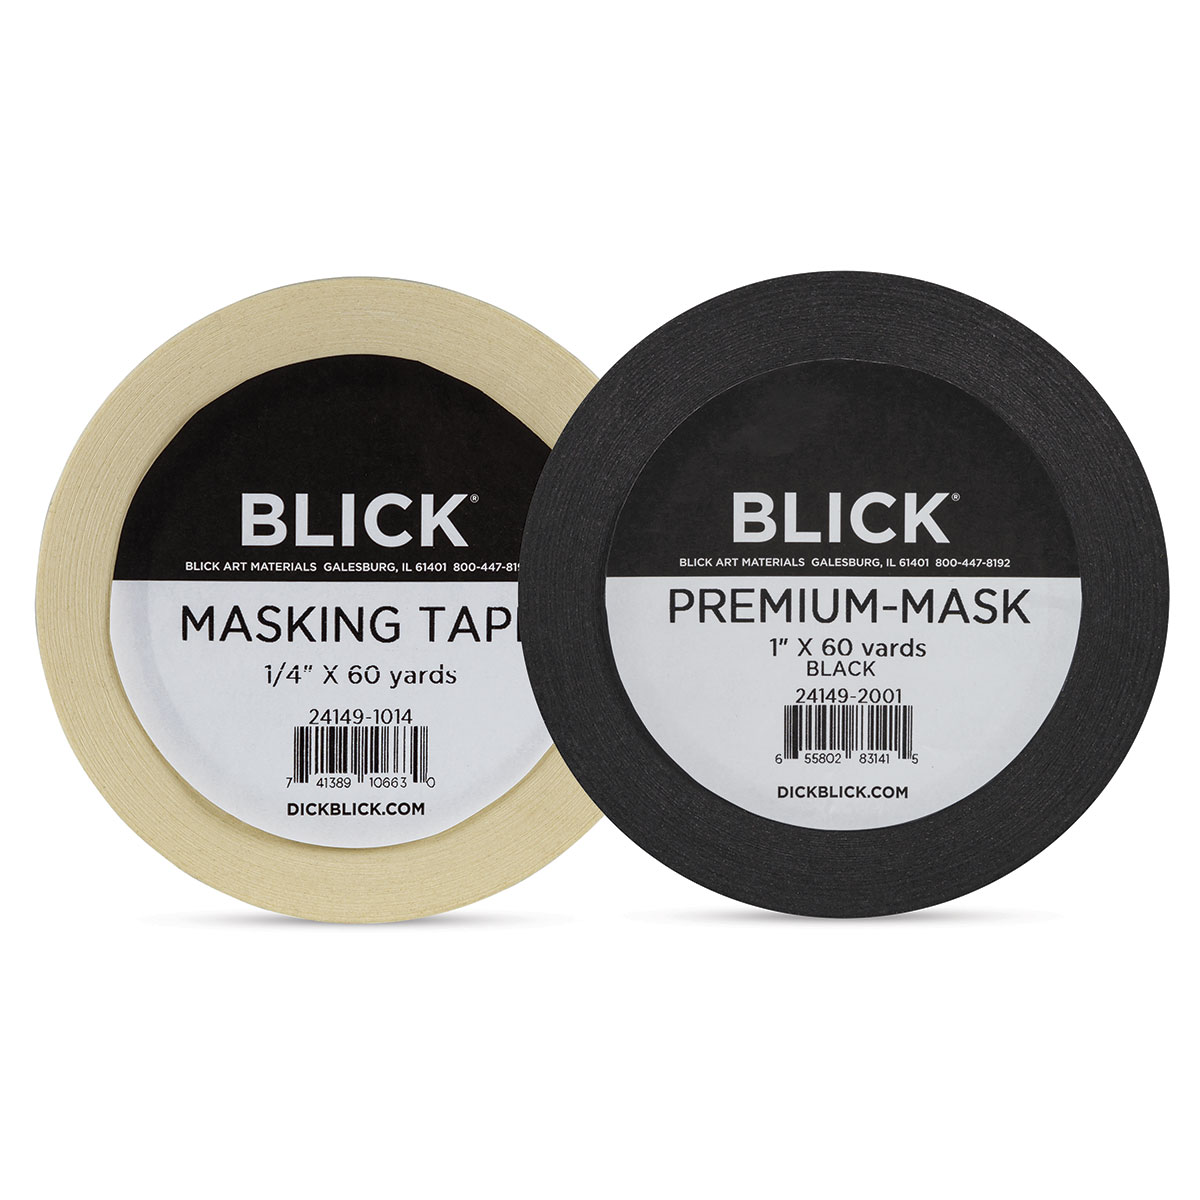 Buy 1 inch Masking Tape Online. Low Prices. Free Shipping. Premium